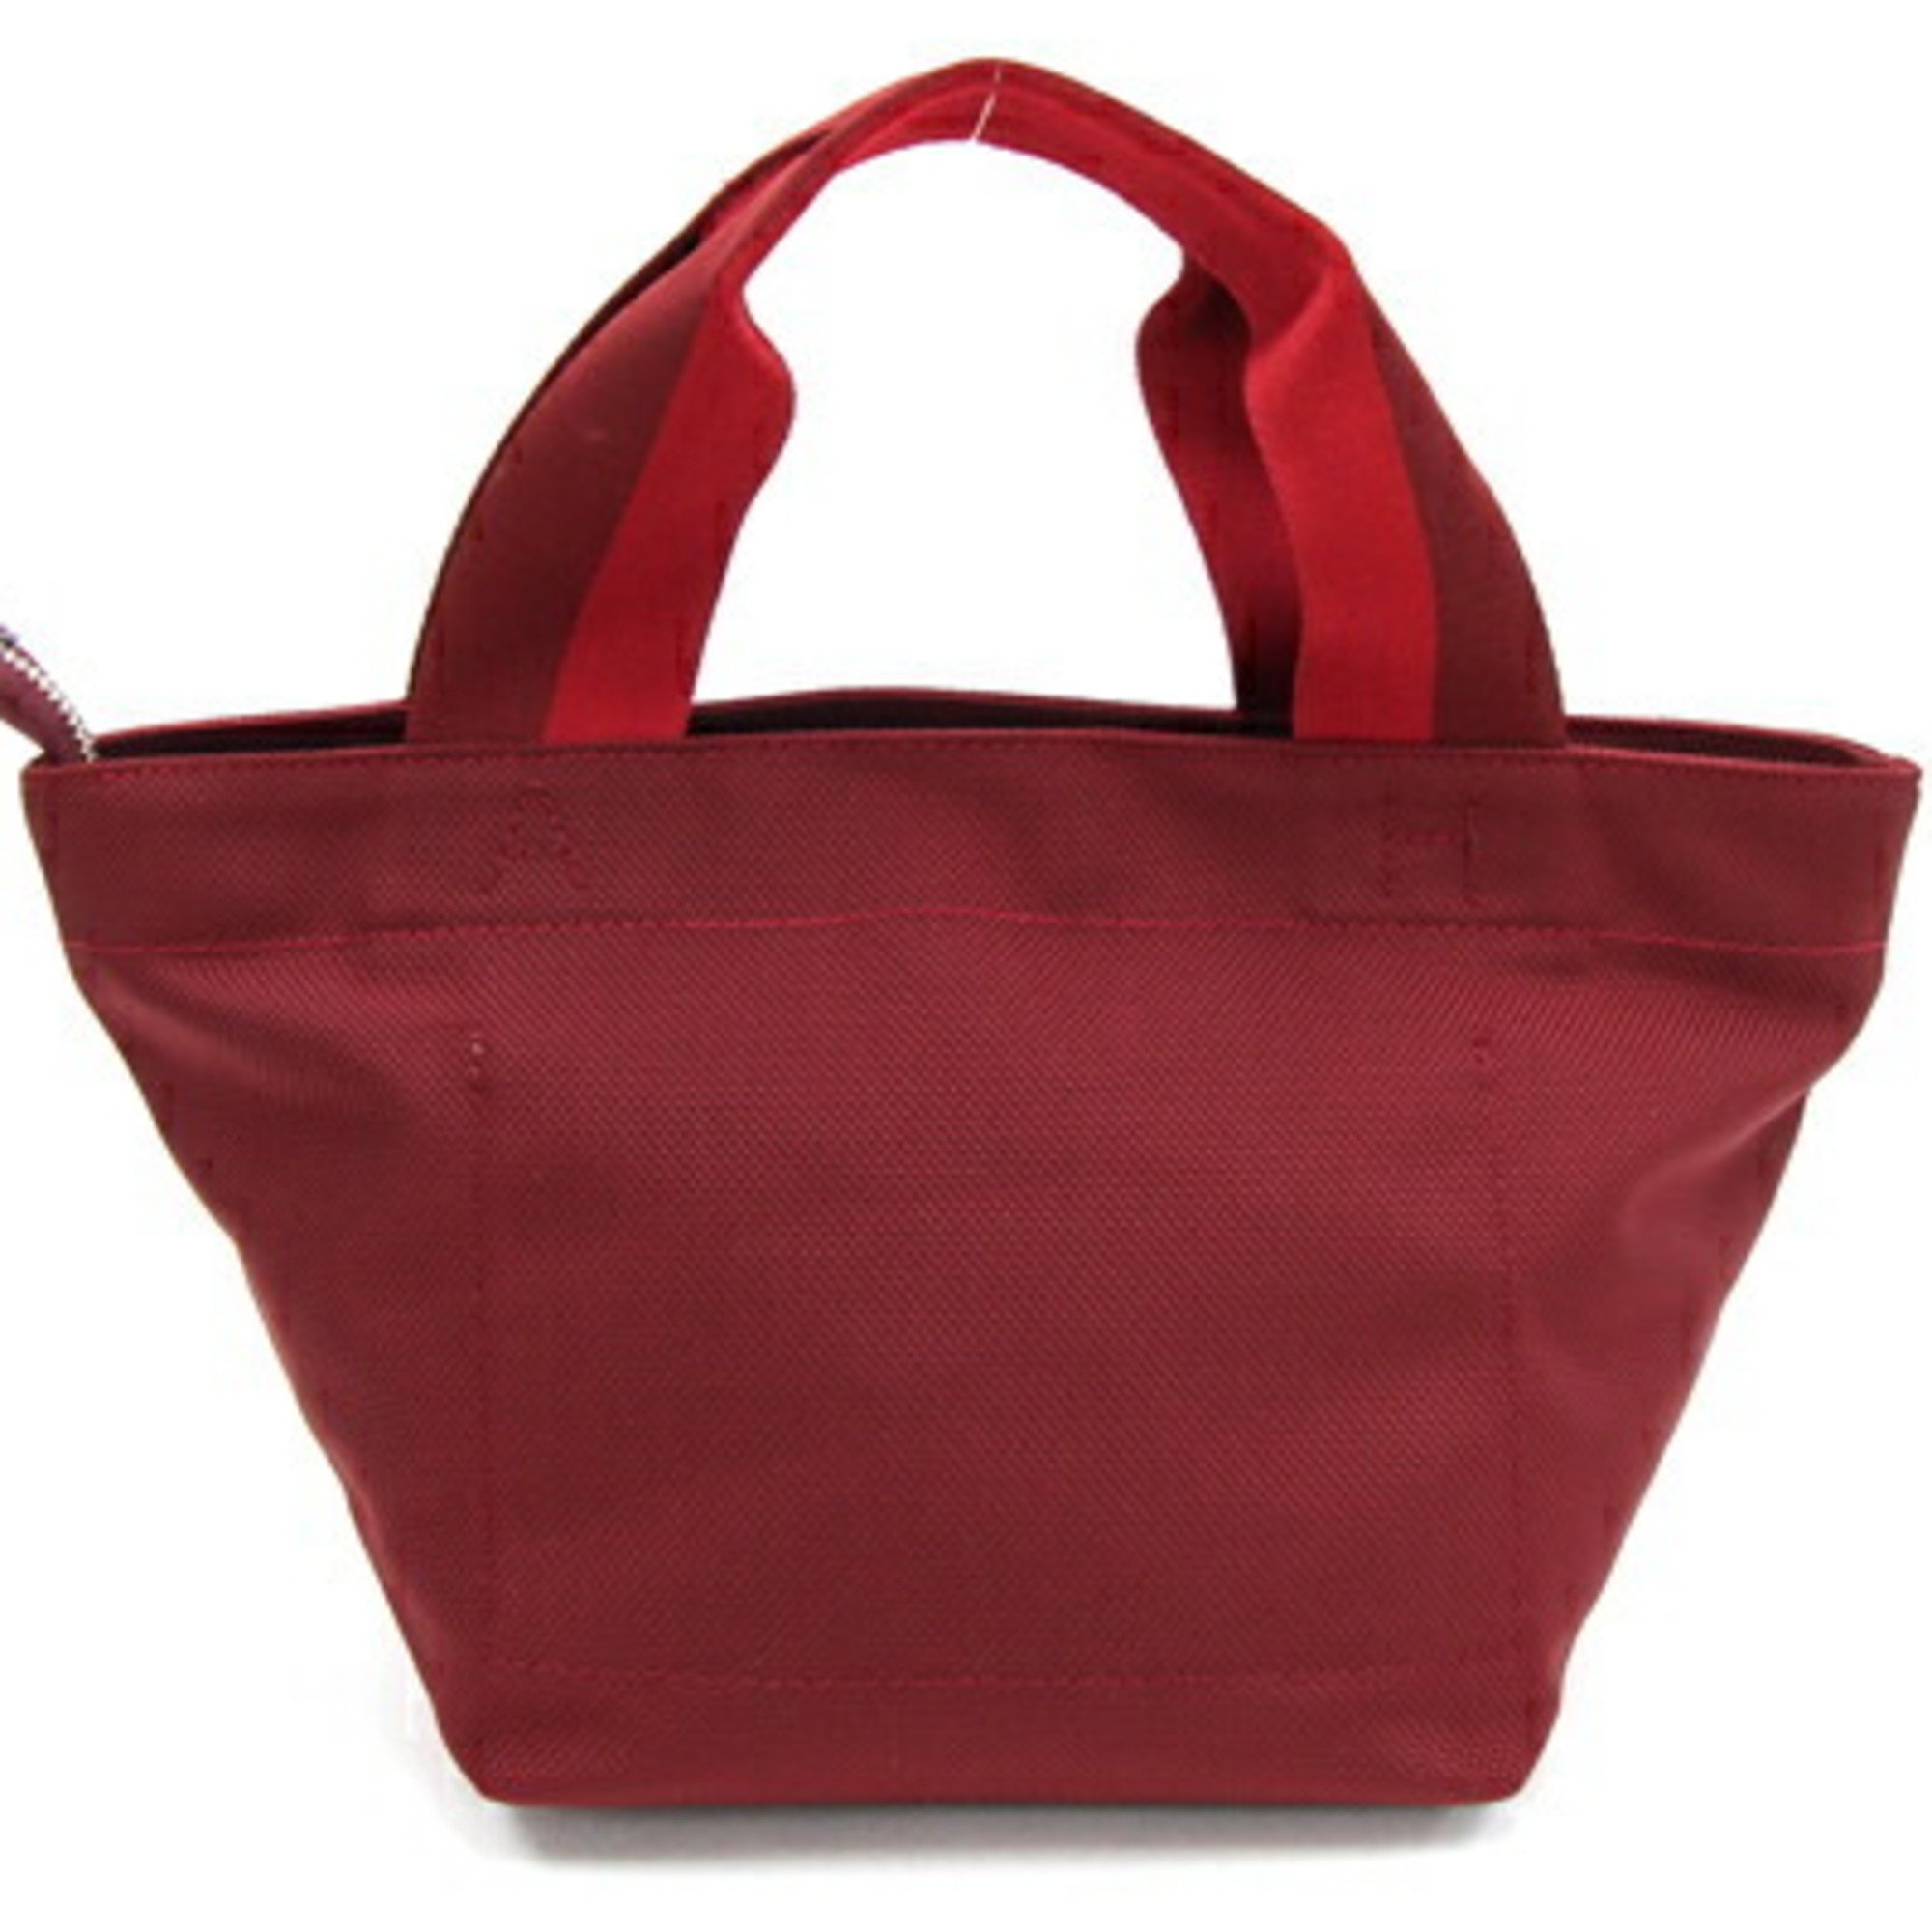 Anya Hindmarch Handbag Eyes 5050925162364 Dark Red Nylon Leather Tote Bag Ladies ANYA HINDMARCH